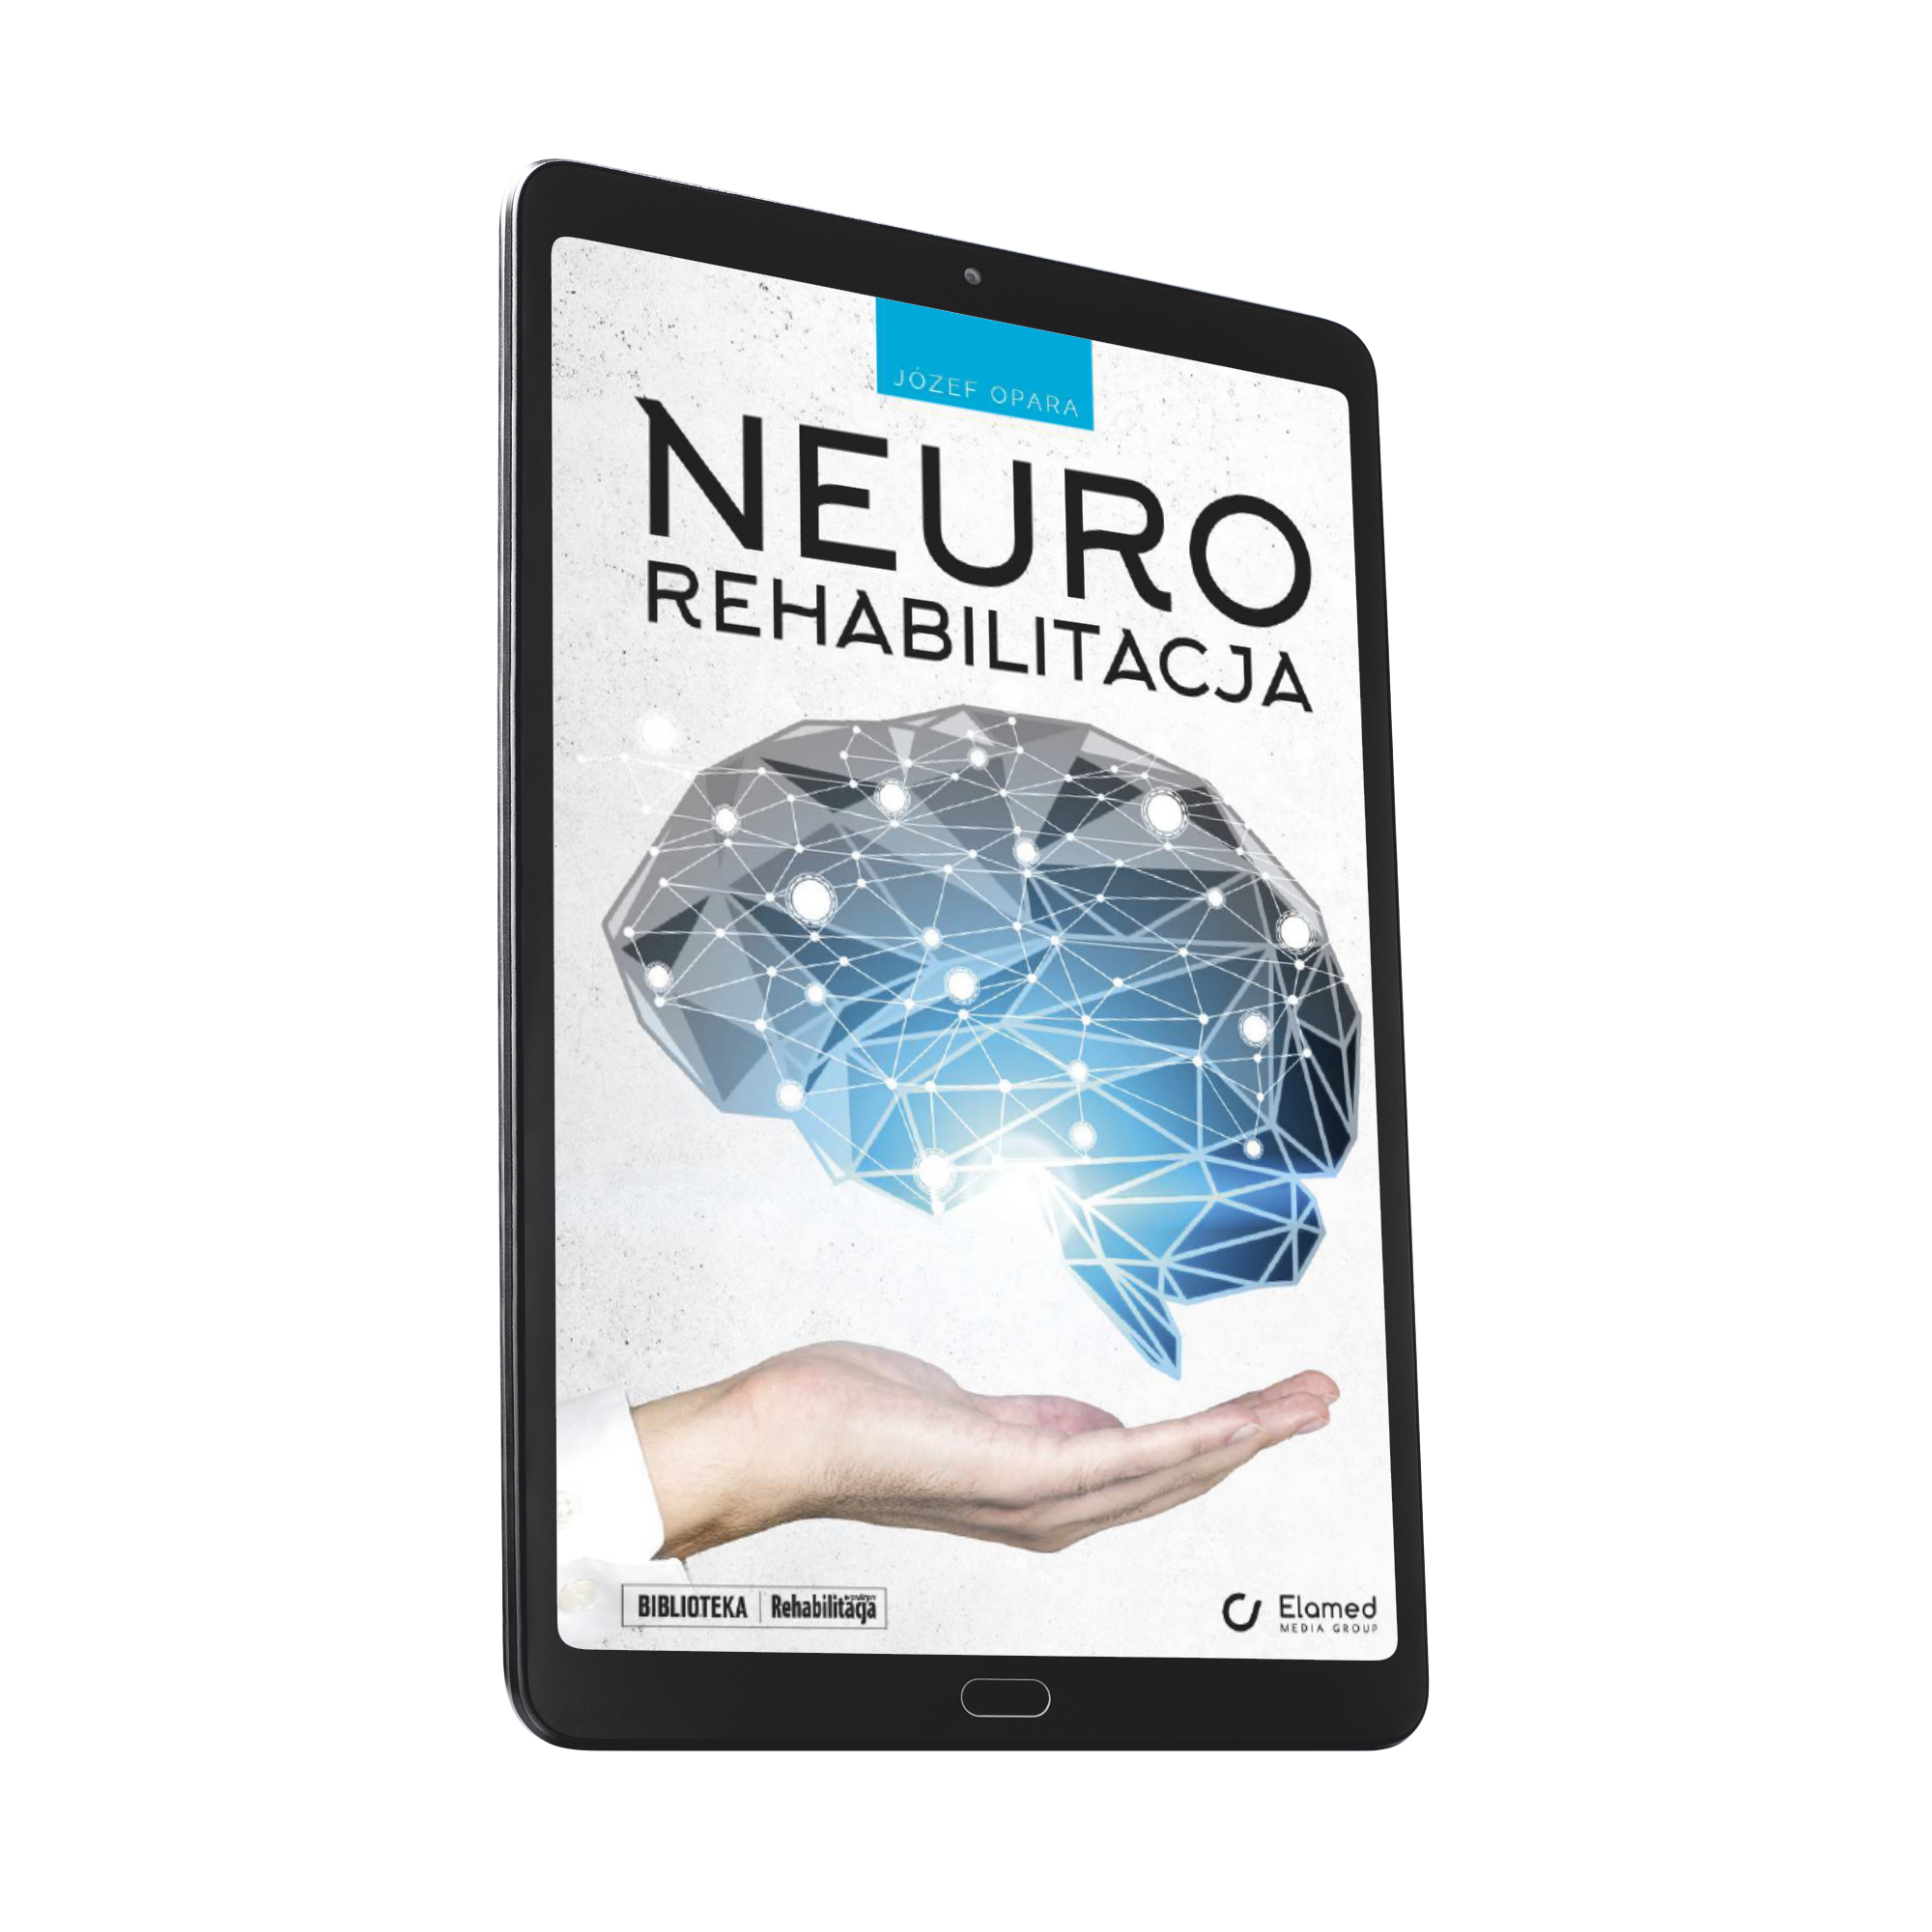 Neurorehabilitacja (e-book)<br />
<br />
<br />
<br />
